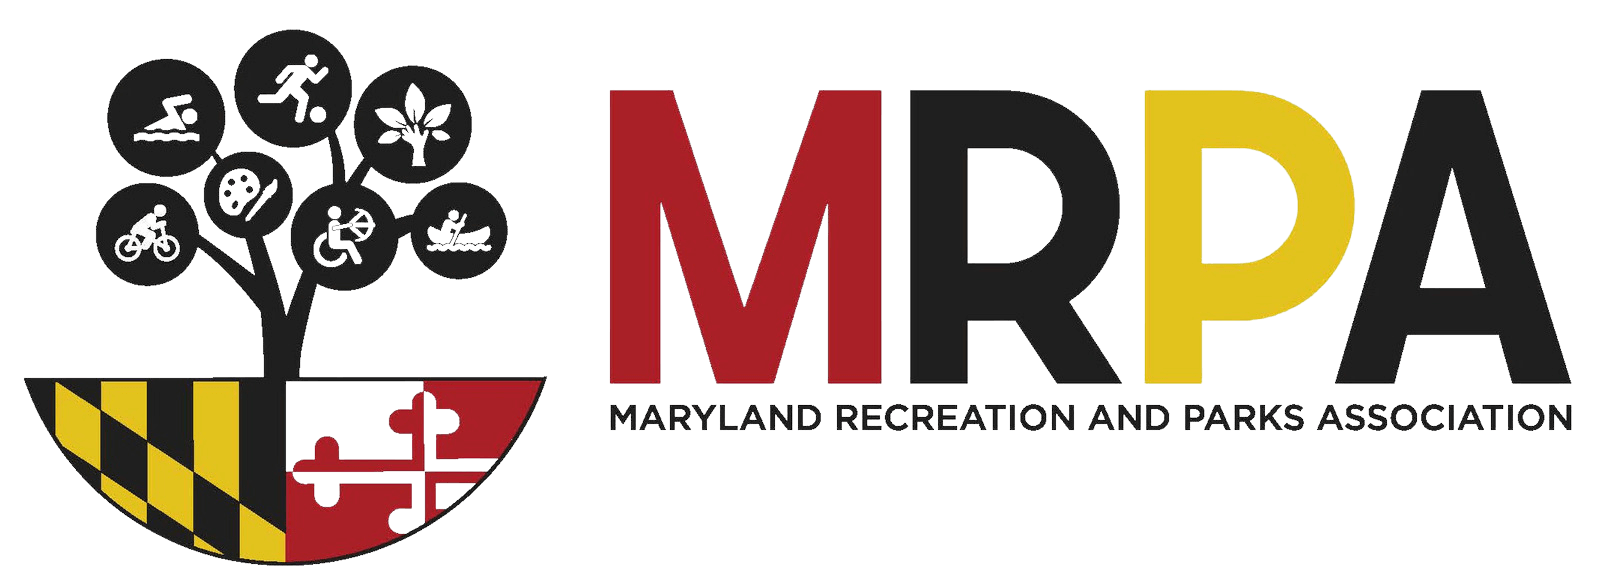 Maryland Rec and Parks Association logo